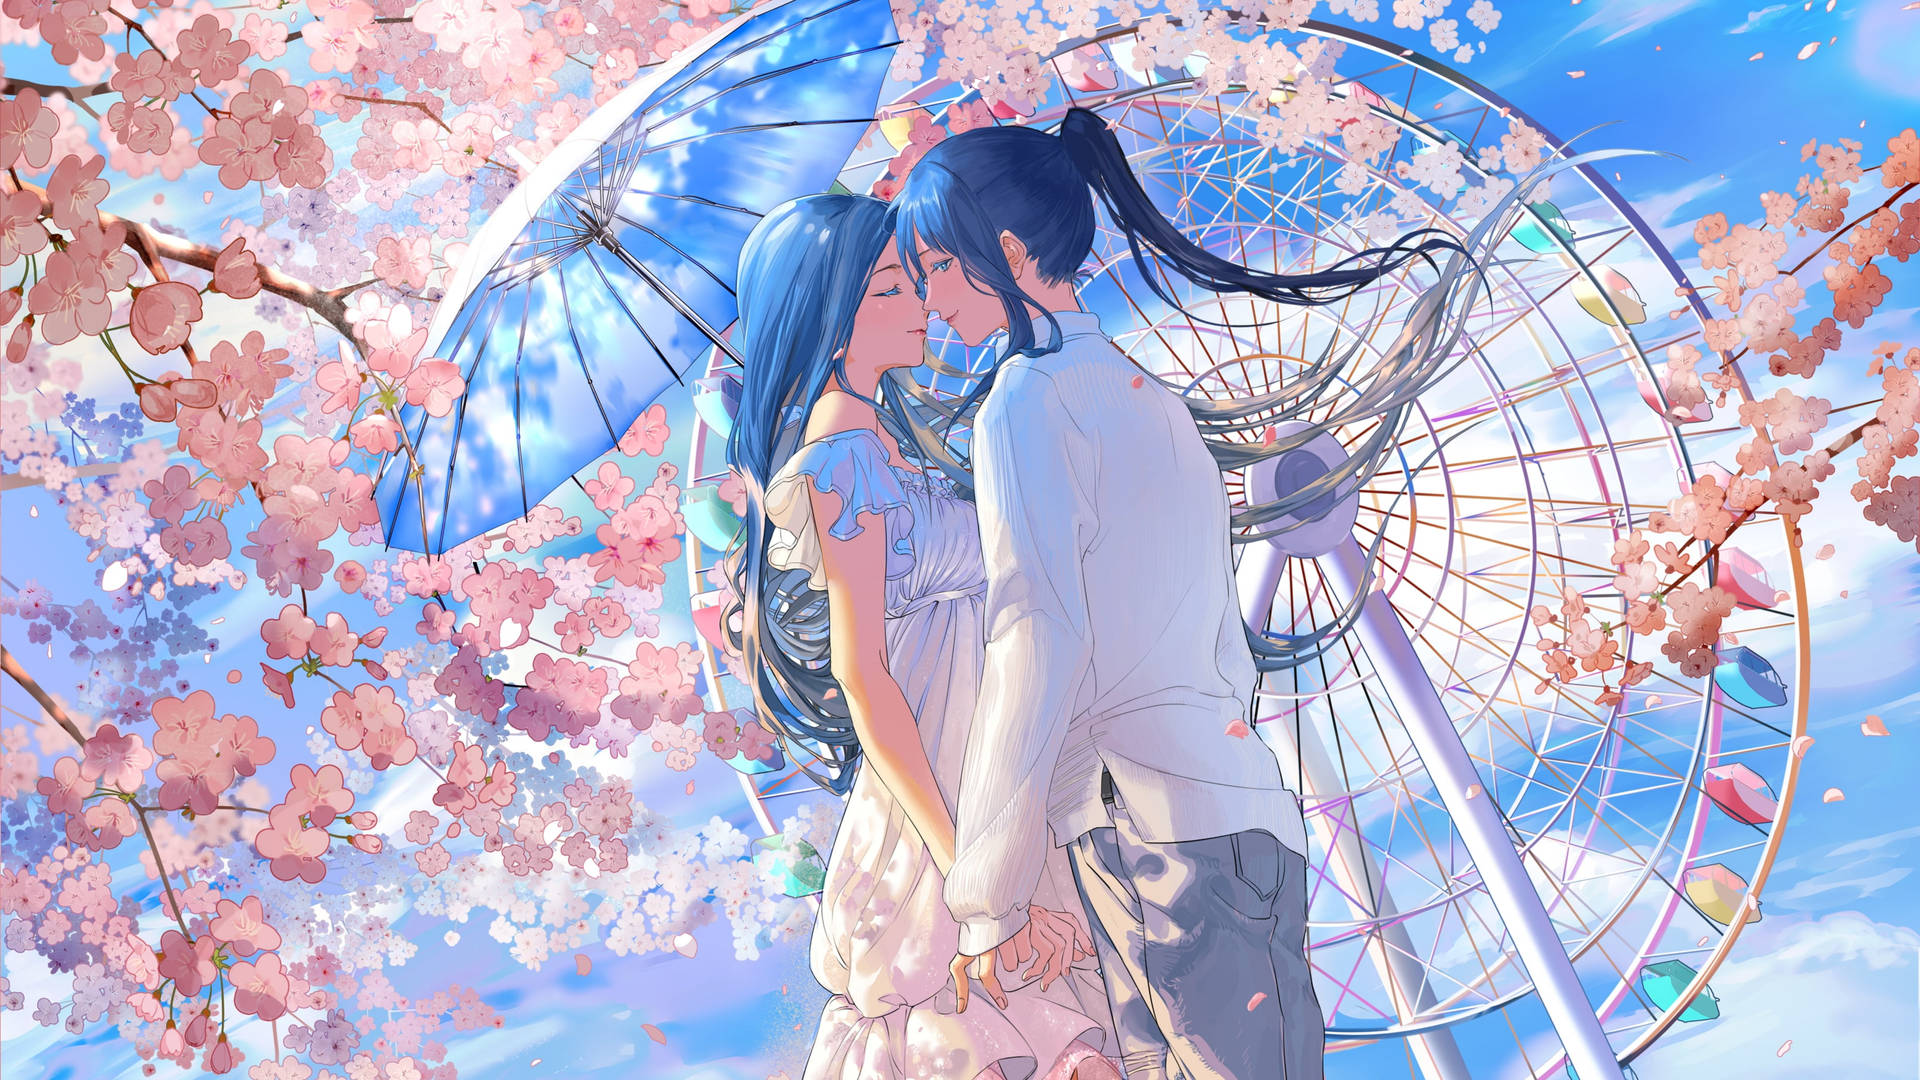 Cute Anime Couple With Ferris Wheel